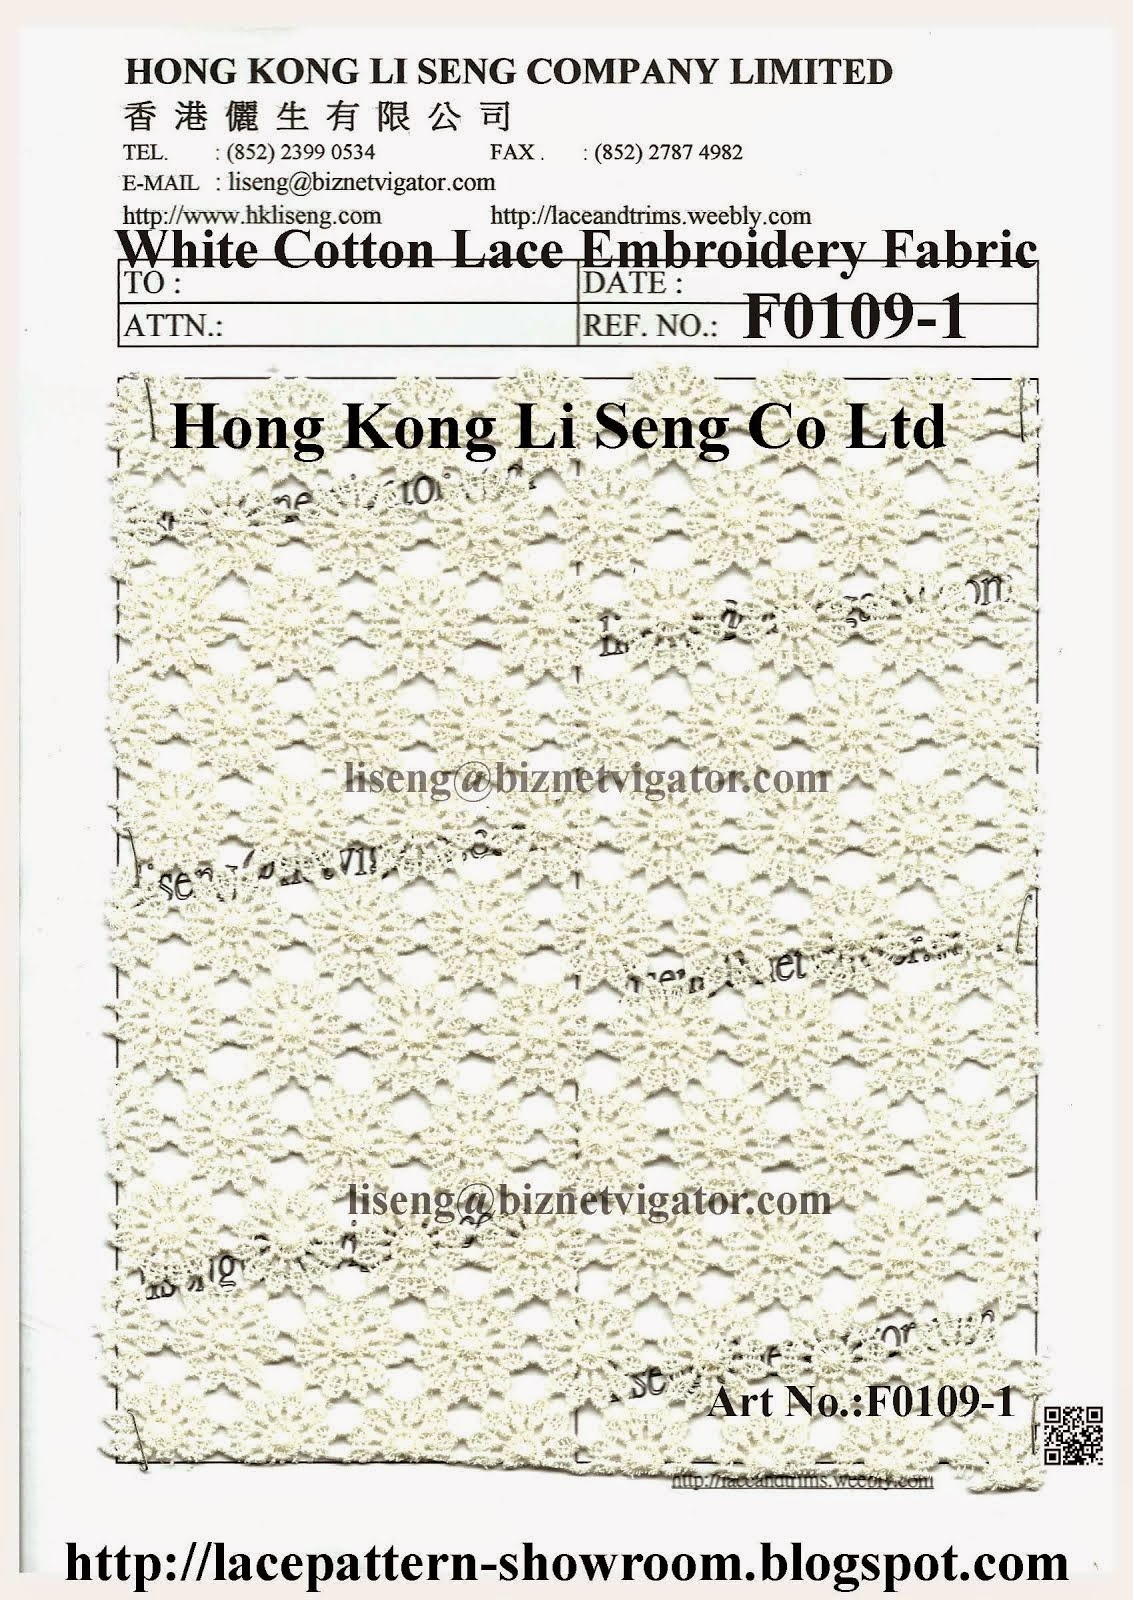 White Cotton Lace Embroidery Fabric Manufactory  - Hong Kong Li Seng Co Ltd